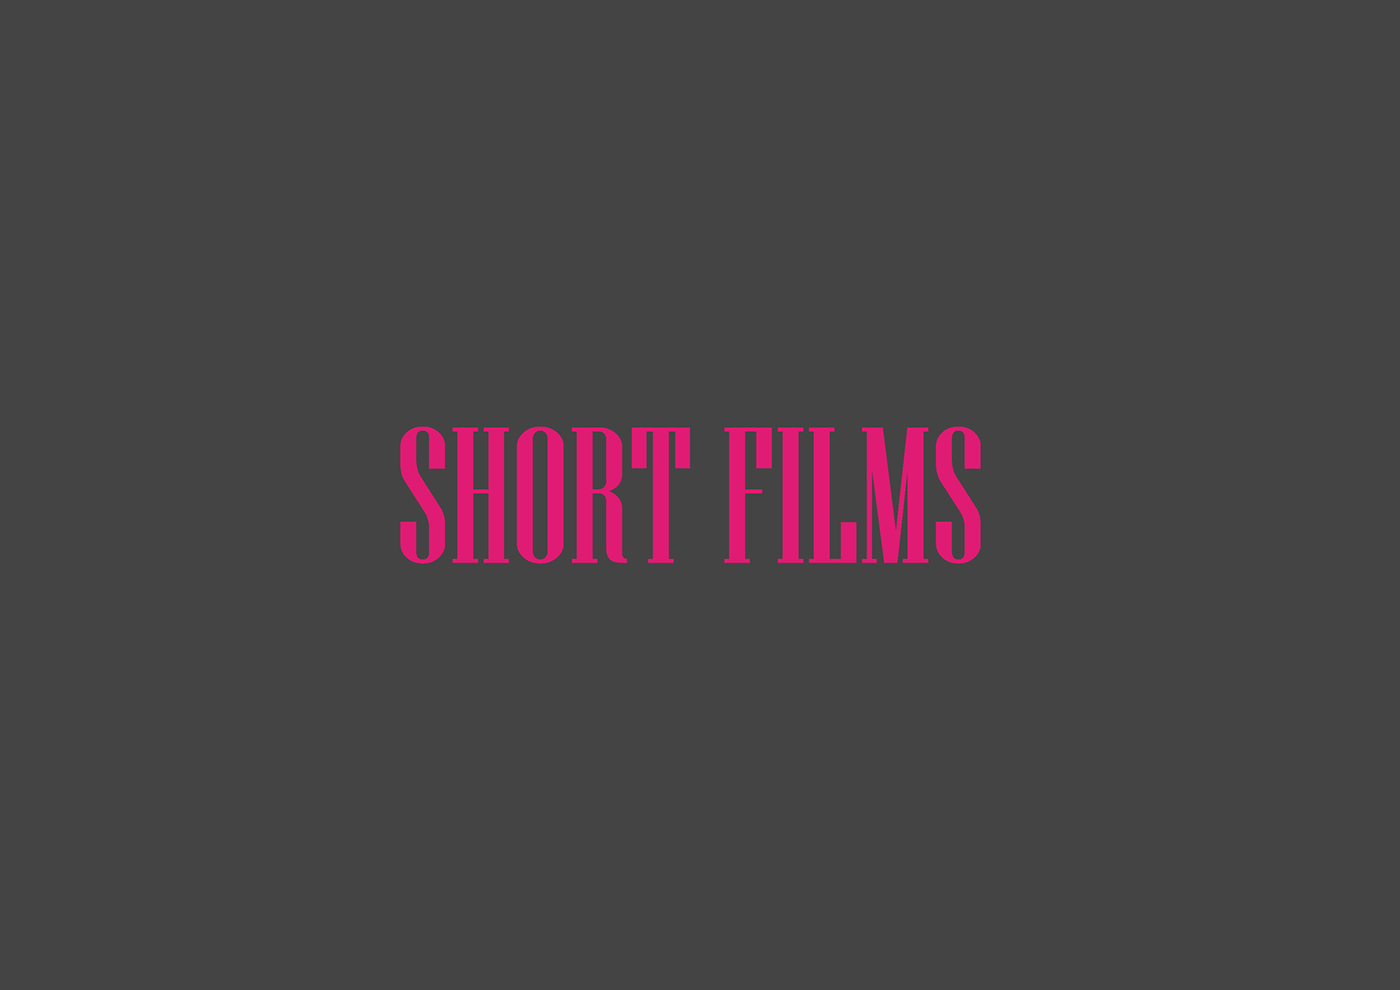 shortfilm Film   Editing  screenwriting   direction filmmaking Filmmaker videography cinematography Video Editing